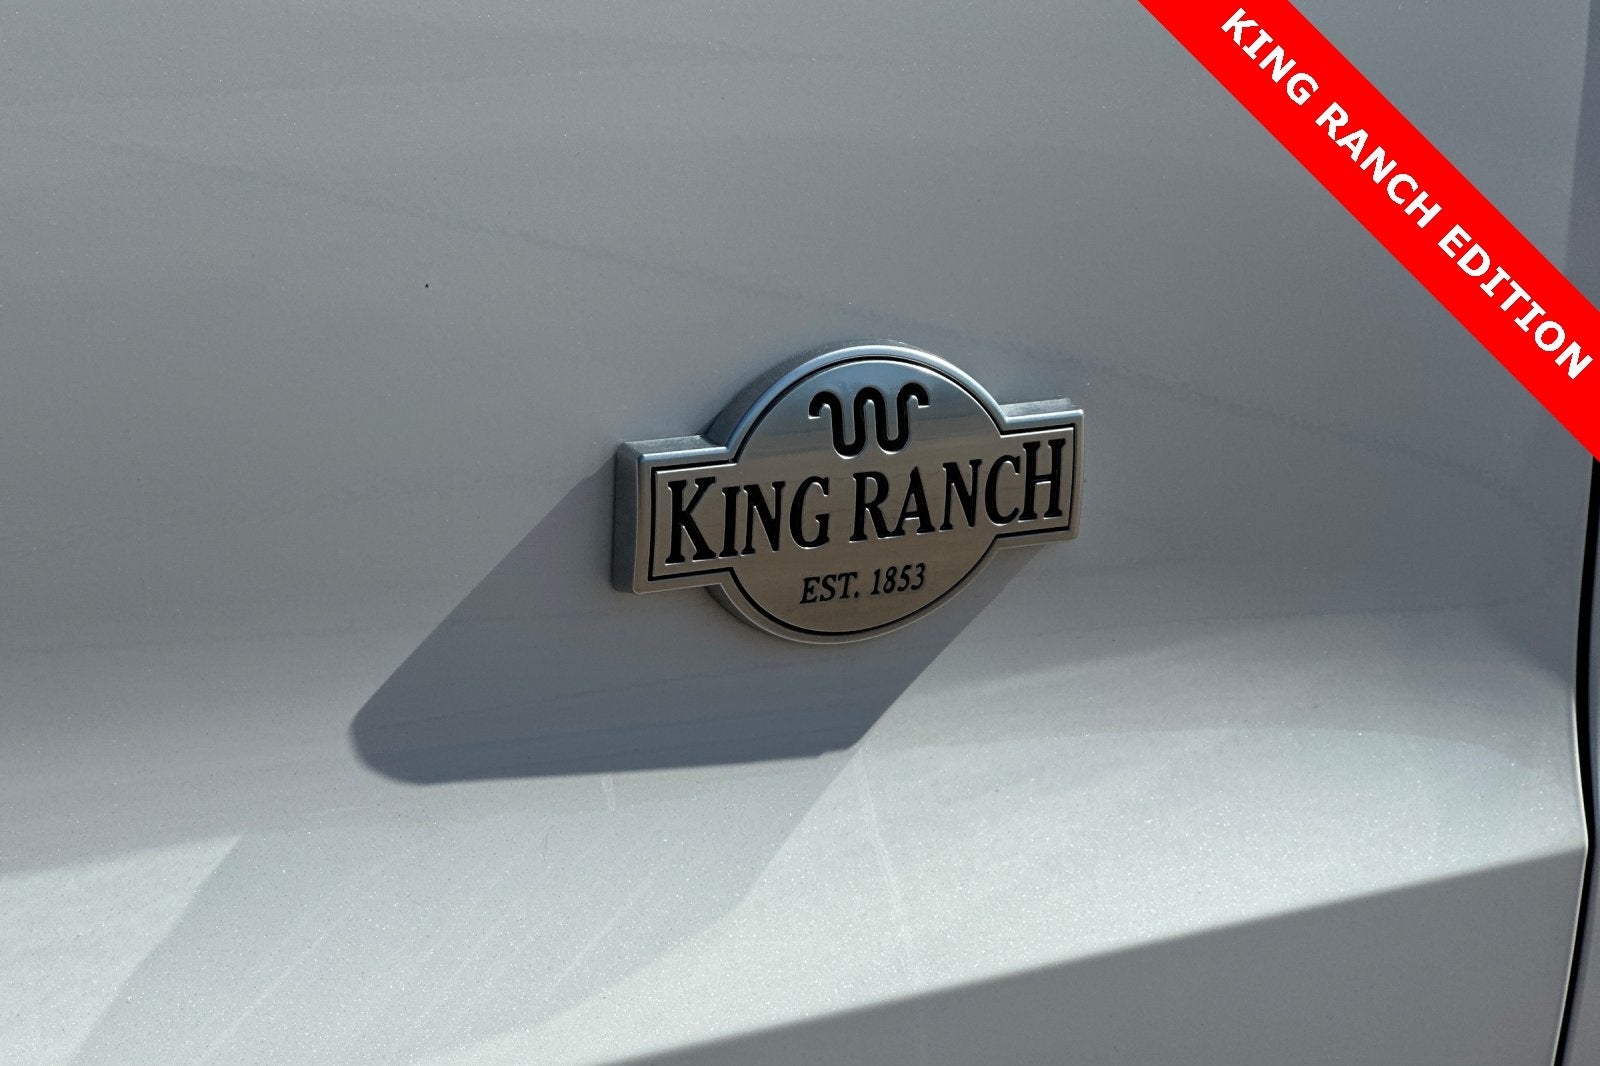 2021 Ford Explorer King Ranch